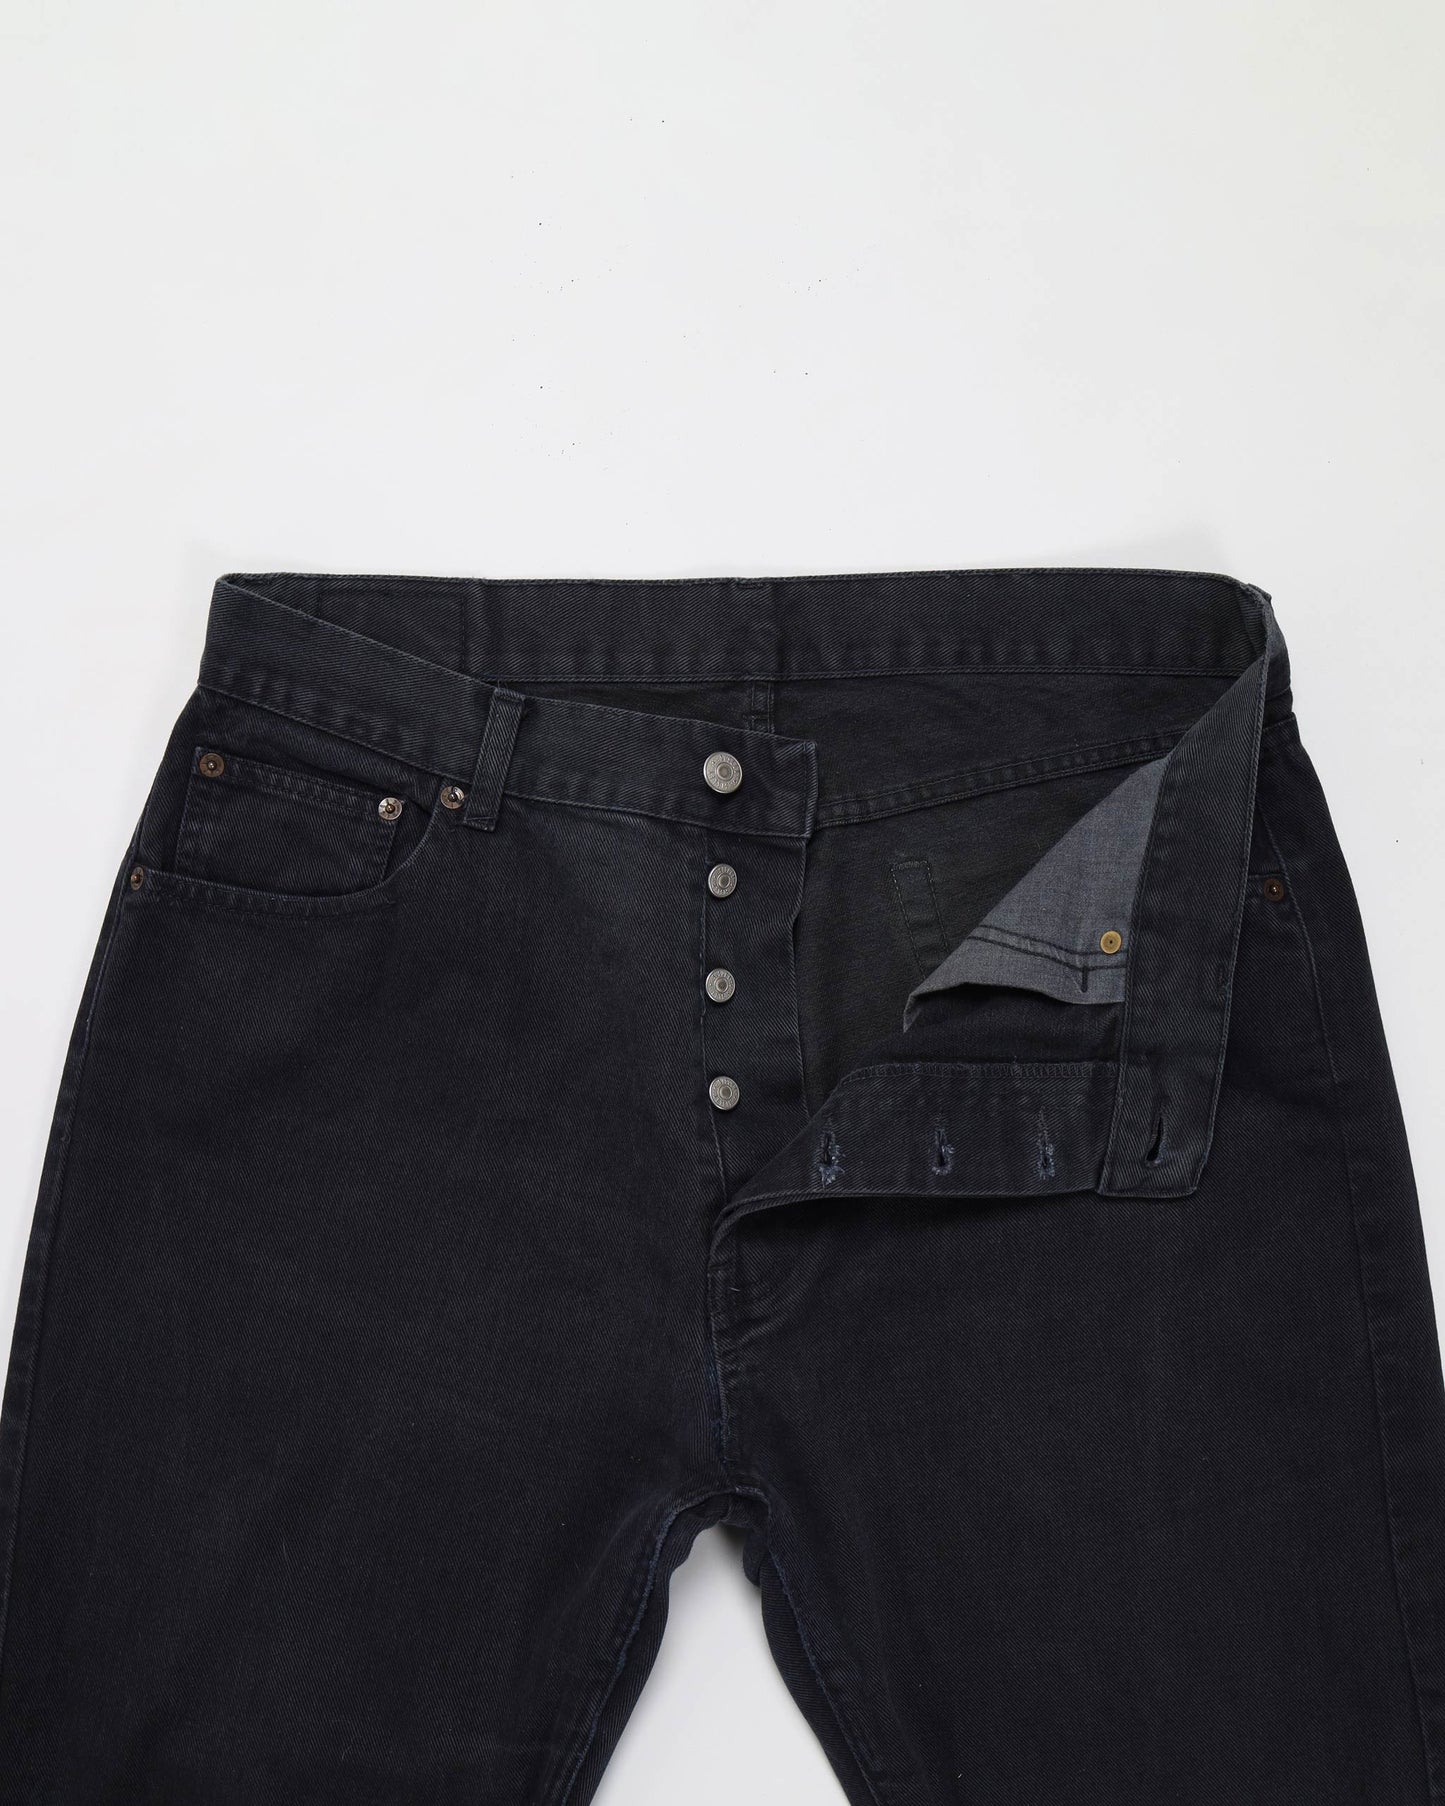 Sisley Straight Fit Denim Jeans in Navy W33